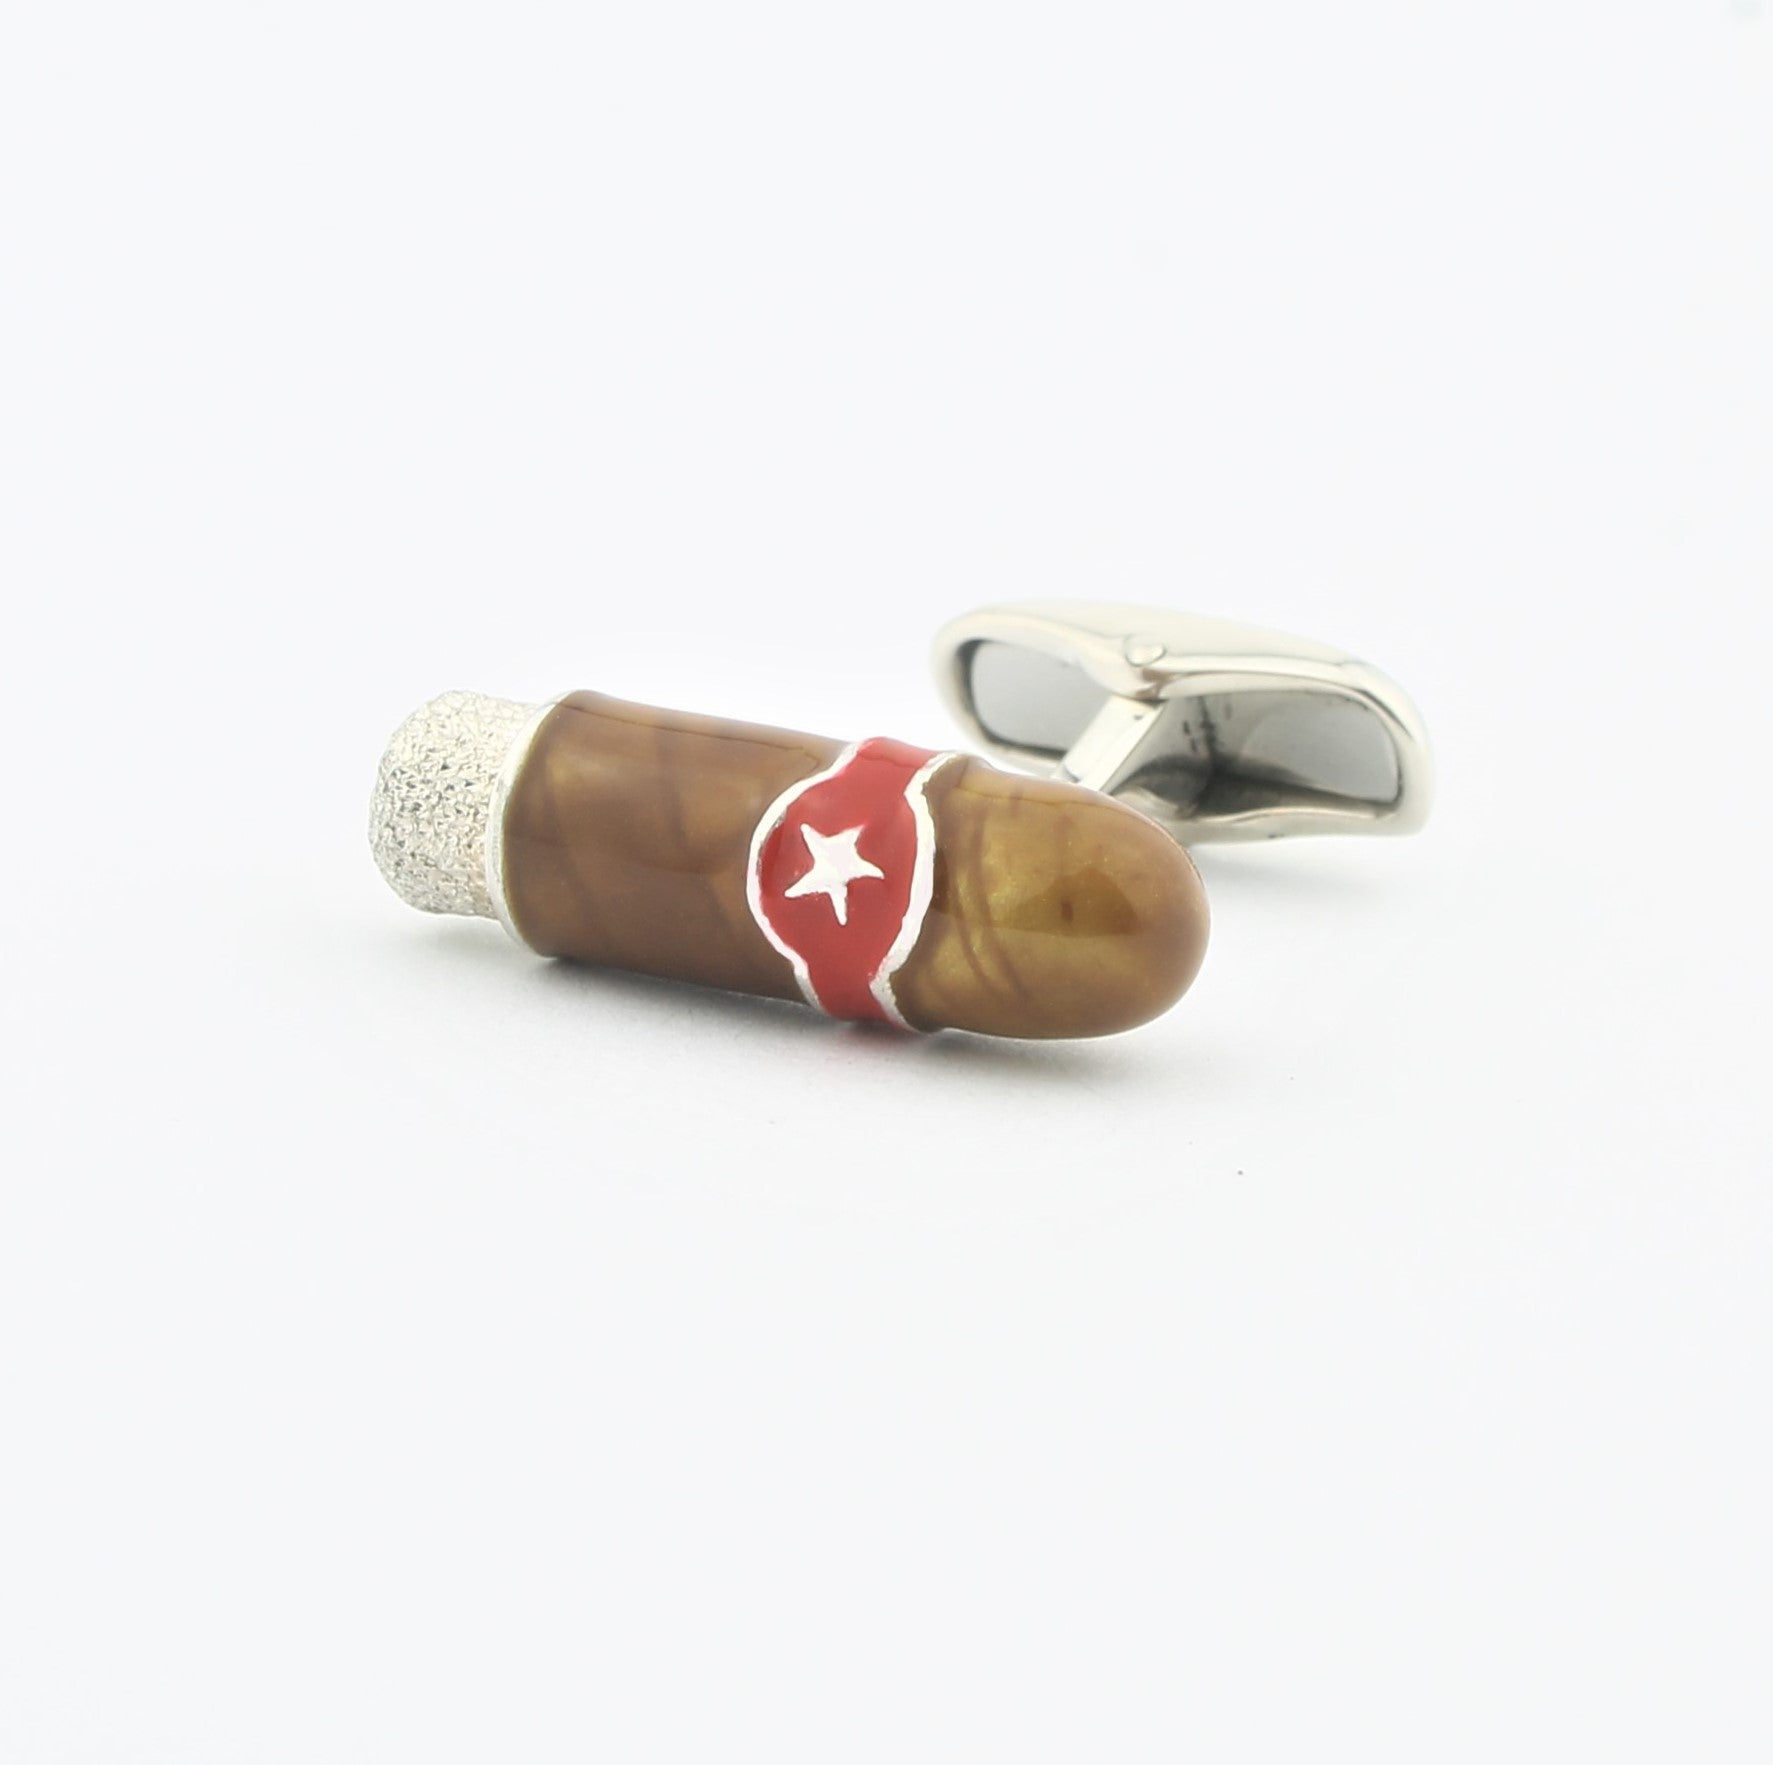 Cigar cufflinks in sterling silver